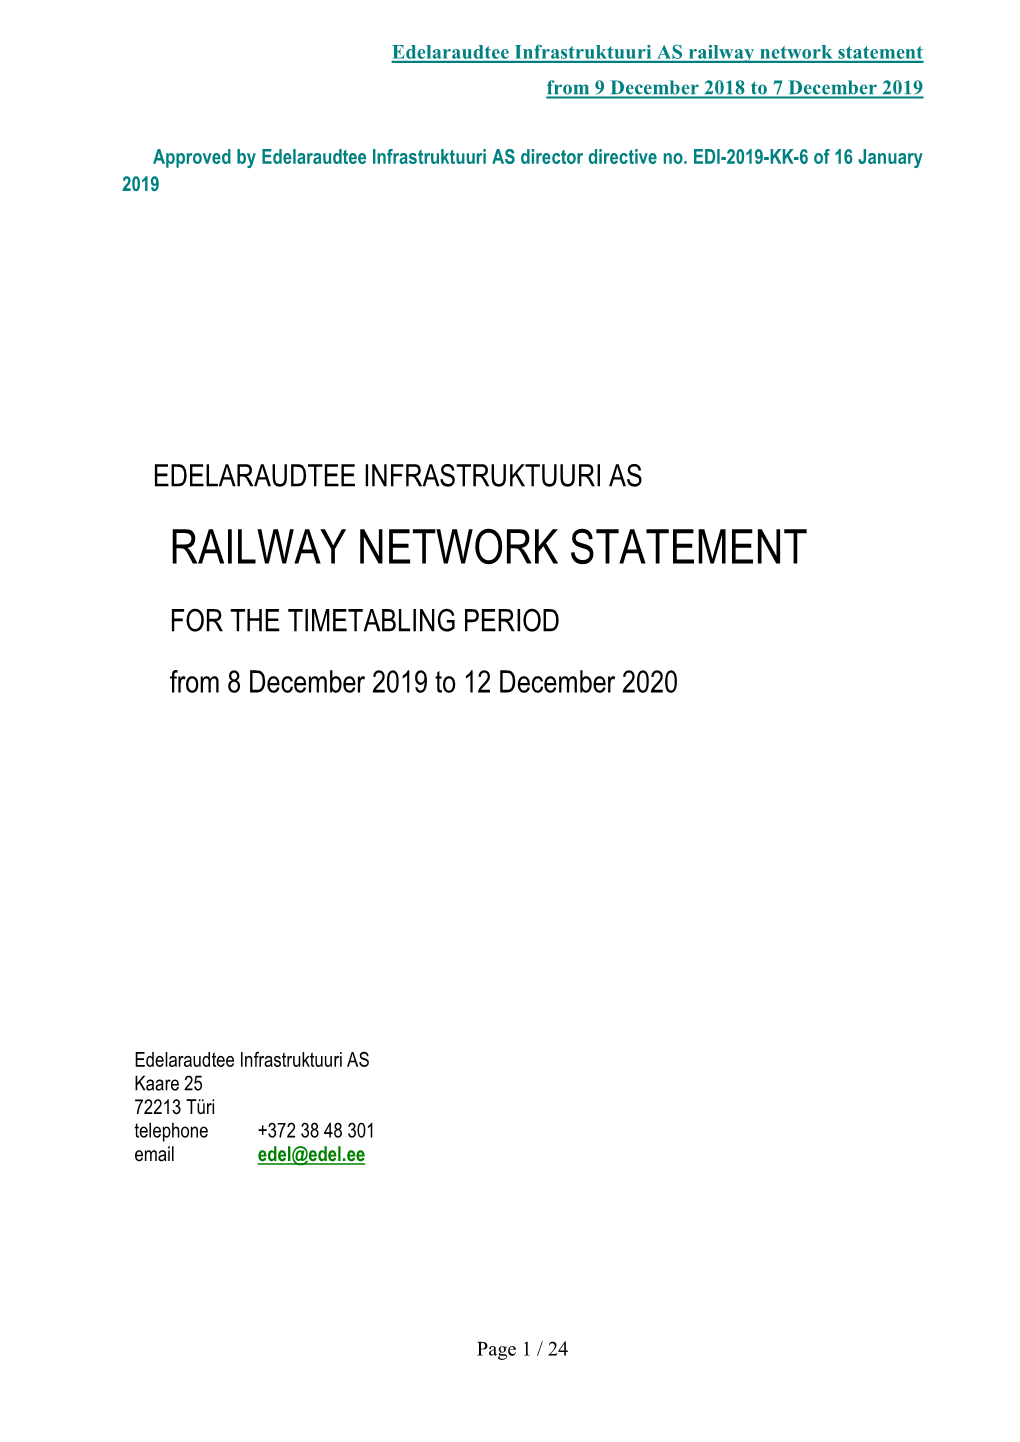 Railway Network Statement from 9 December 2018 to 7 December 2019